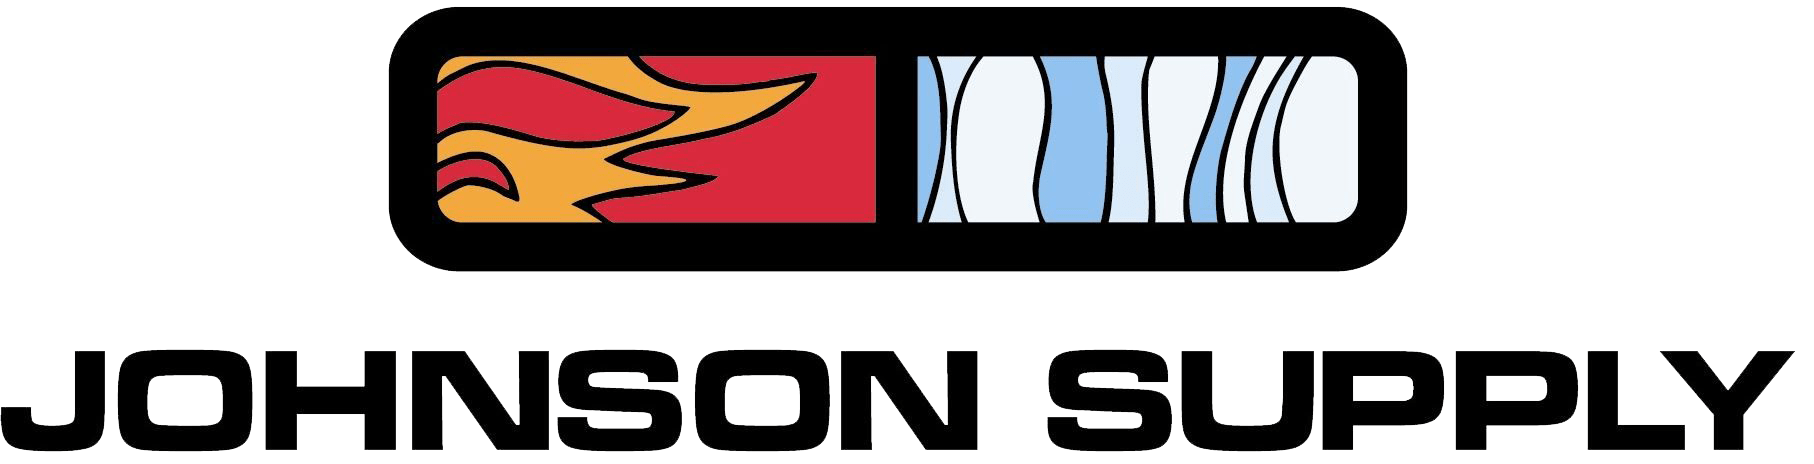 johnson supply logo